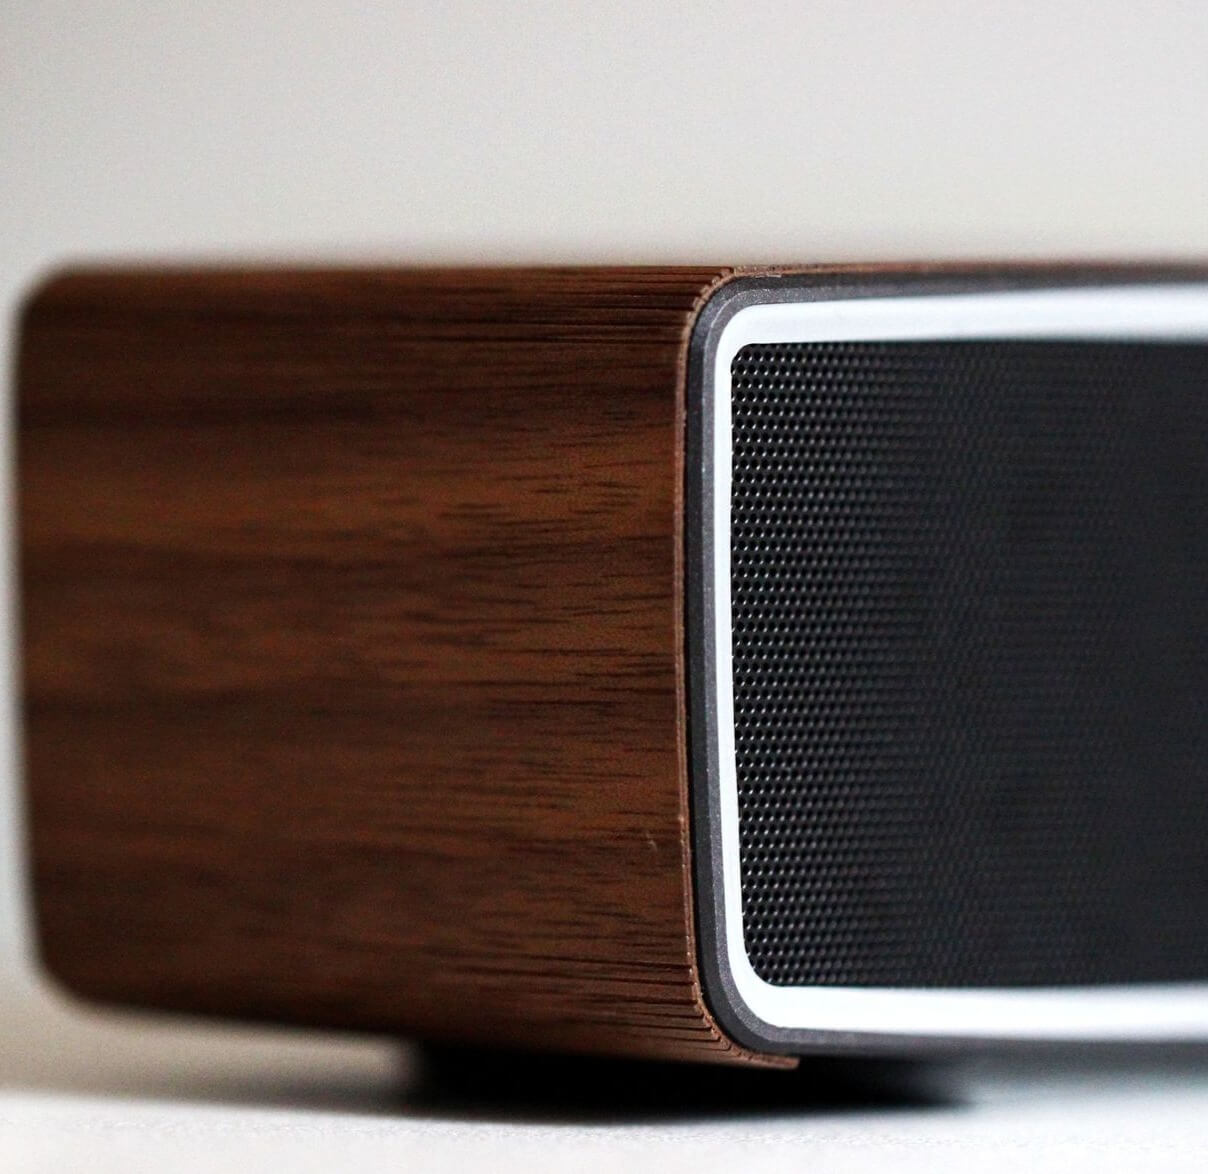 Black Friday Bose speakers - speaker close-up